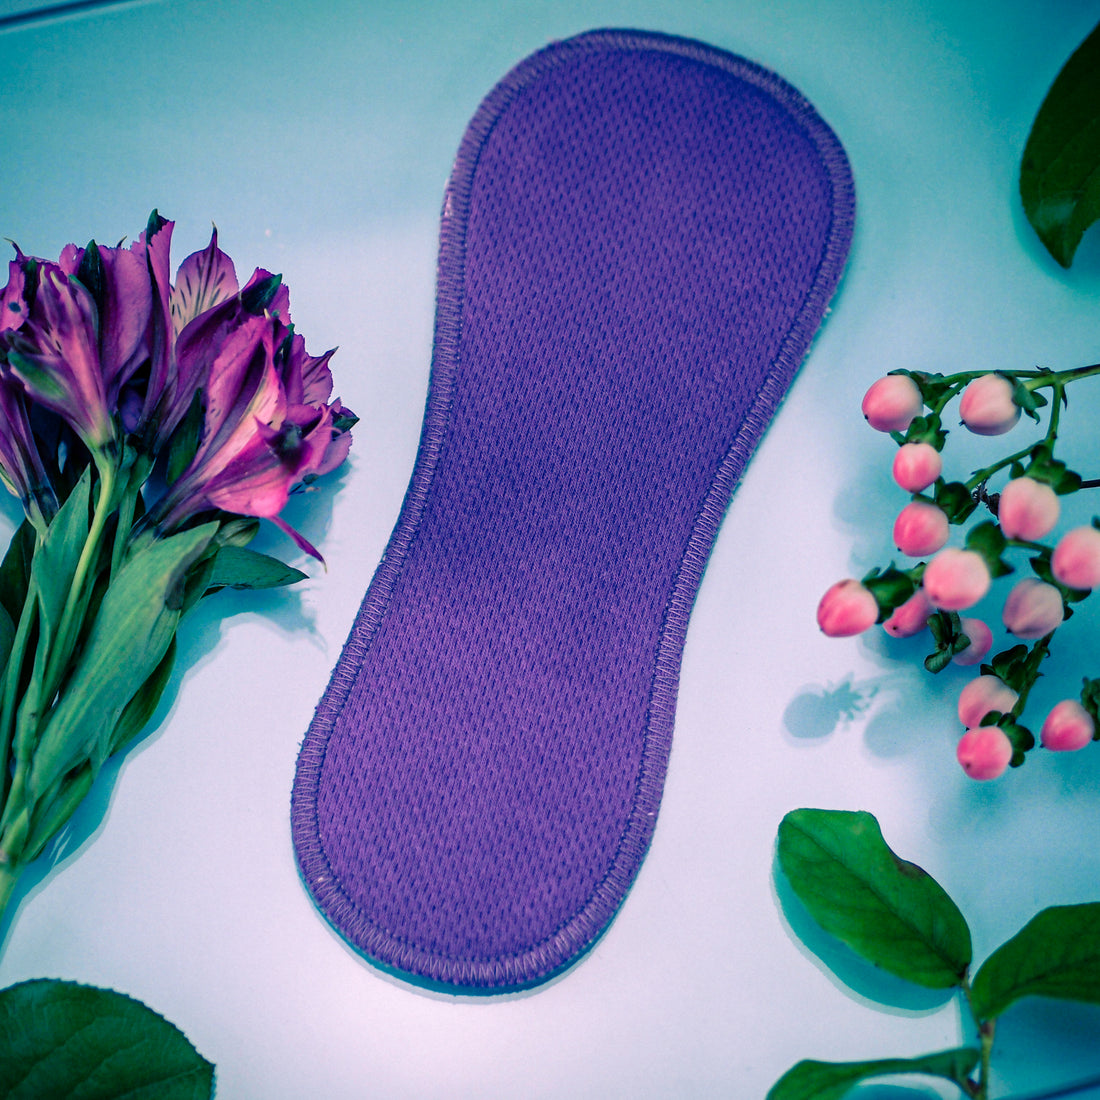 Oko Pads - Reusable Menstrual Pads and Panty Liners